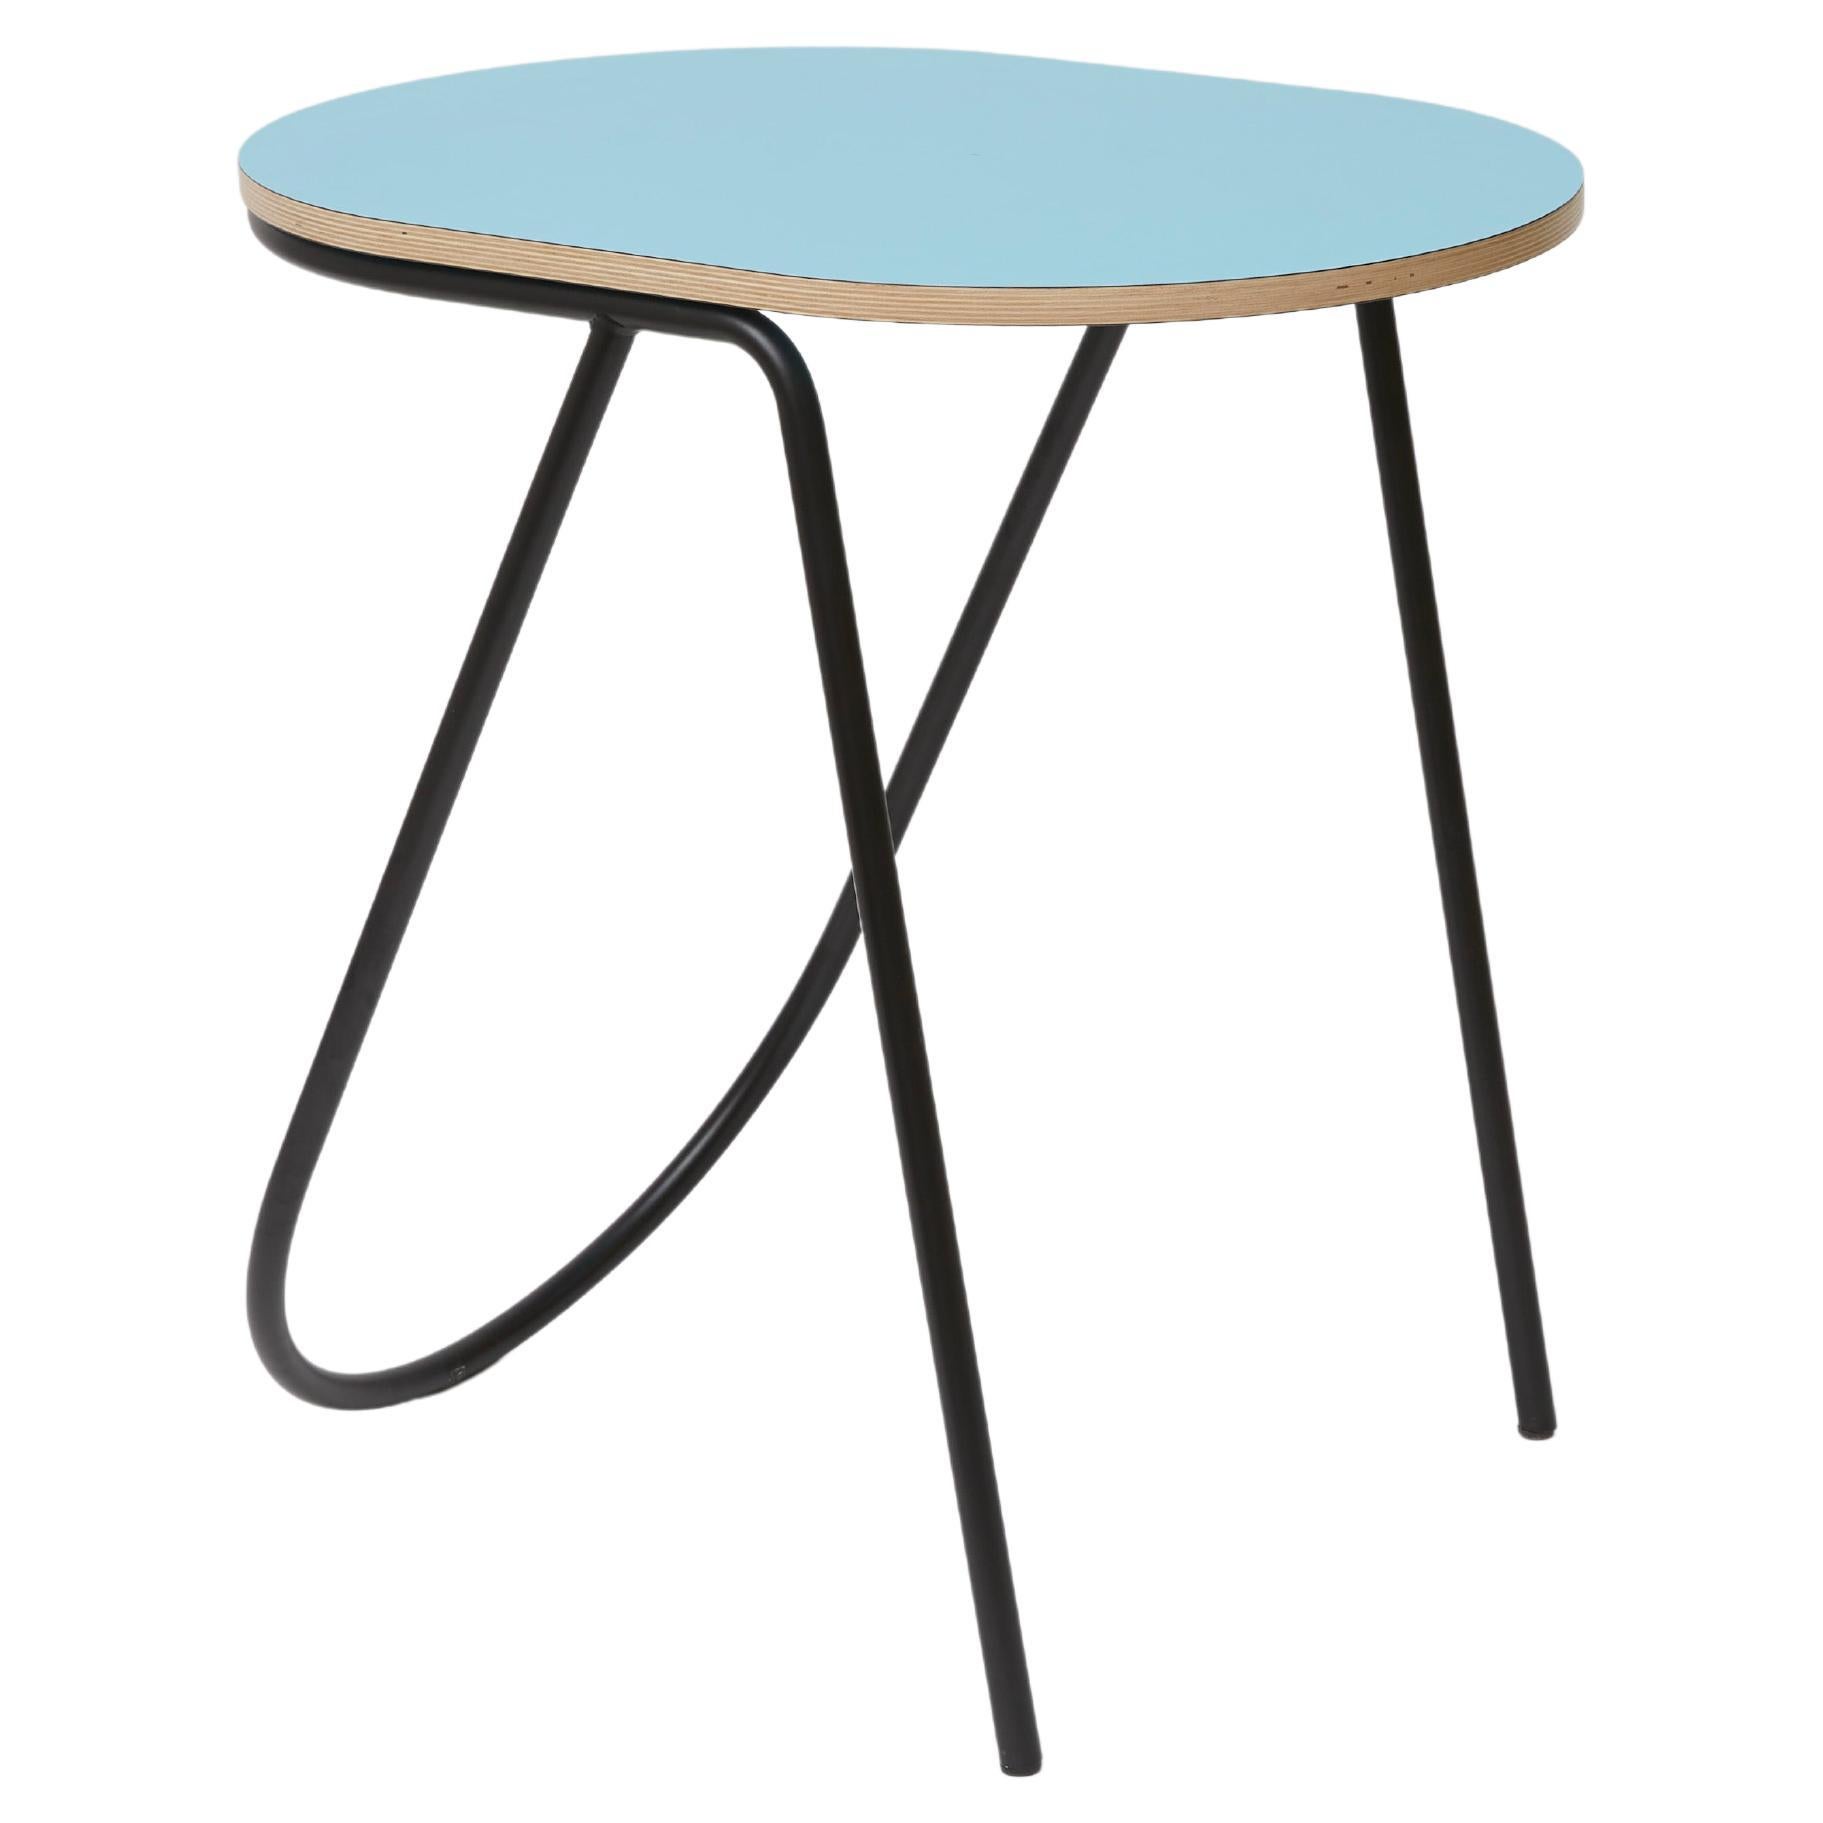 La Misciù Side Table, Black, Light Blue & Light Wood For Sale